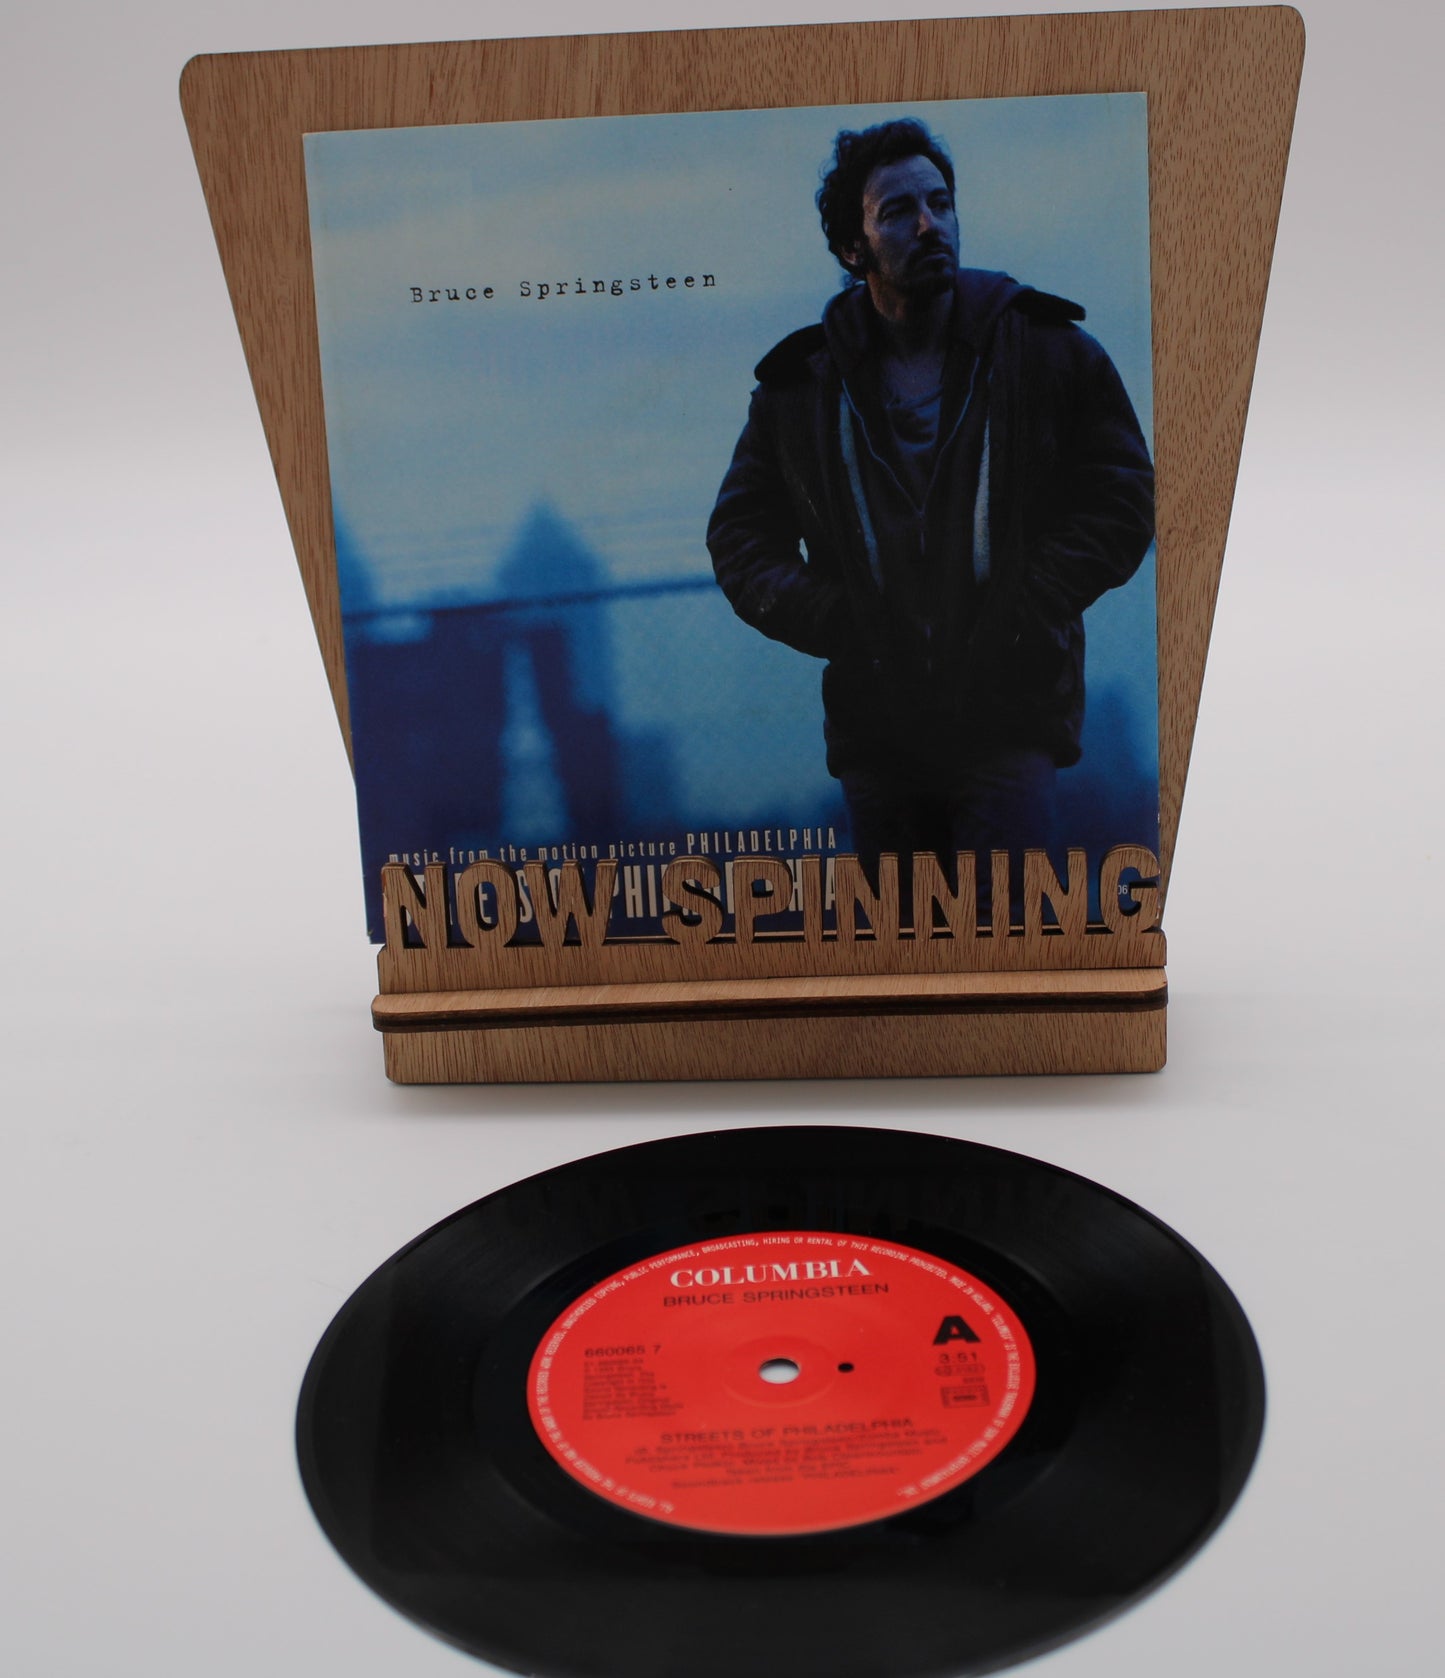 Bruce Springsteen - Streets of Philadelphia 1994 -UK Import 7" Vinyl Picture Sleeve Near Mint